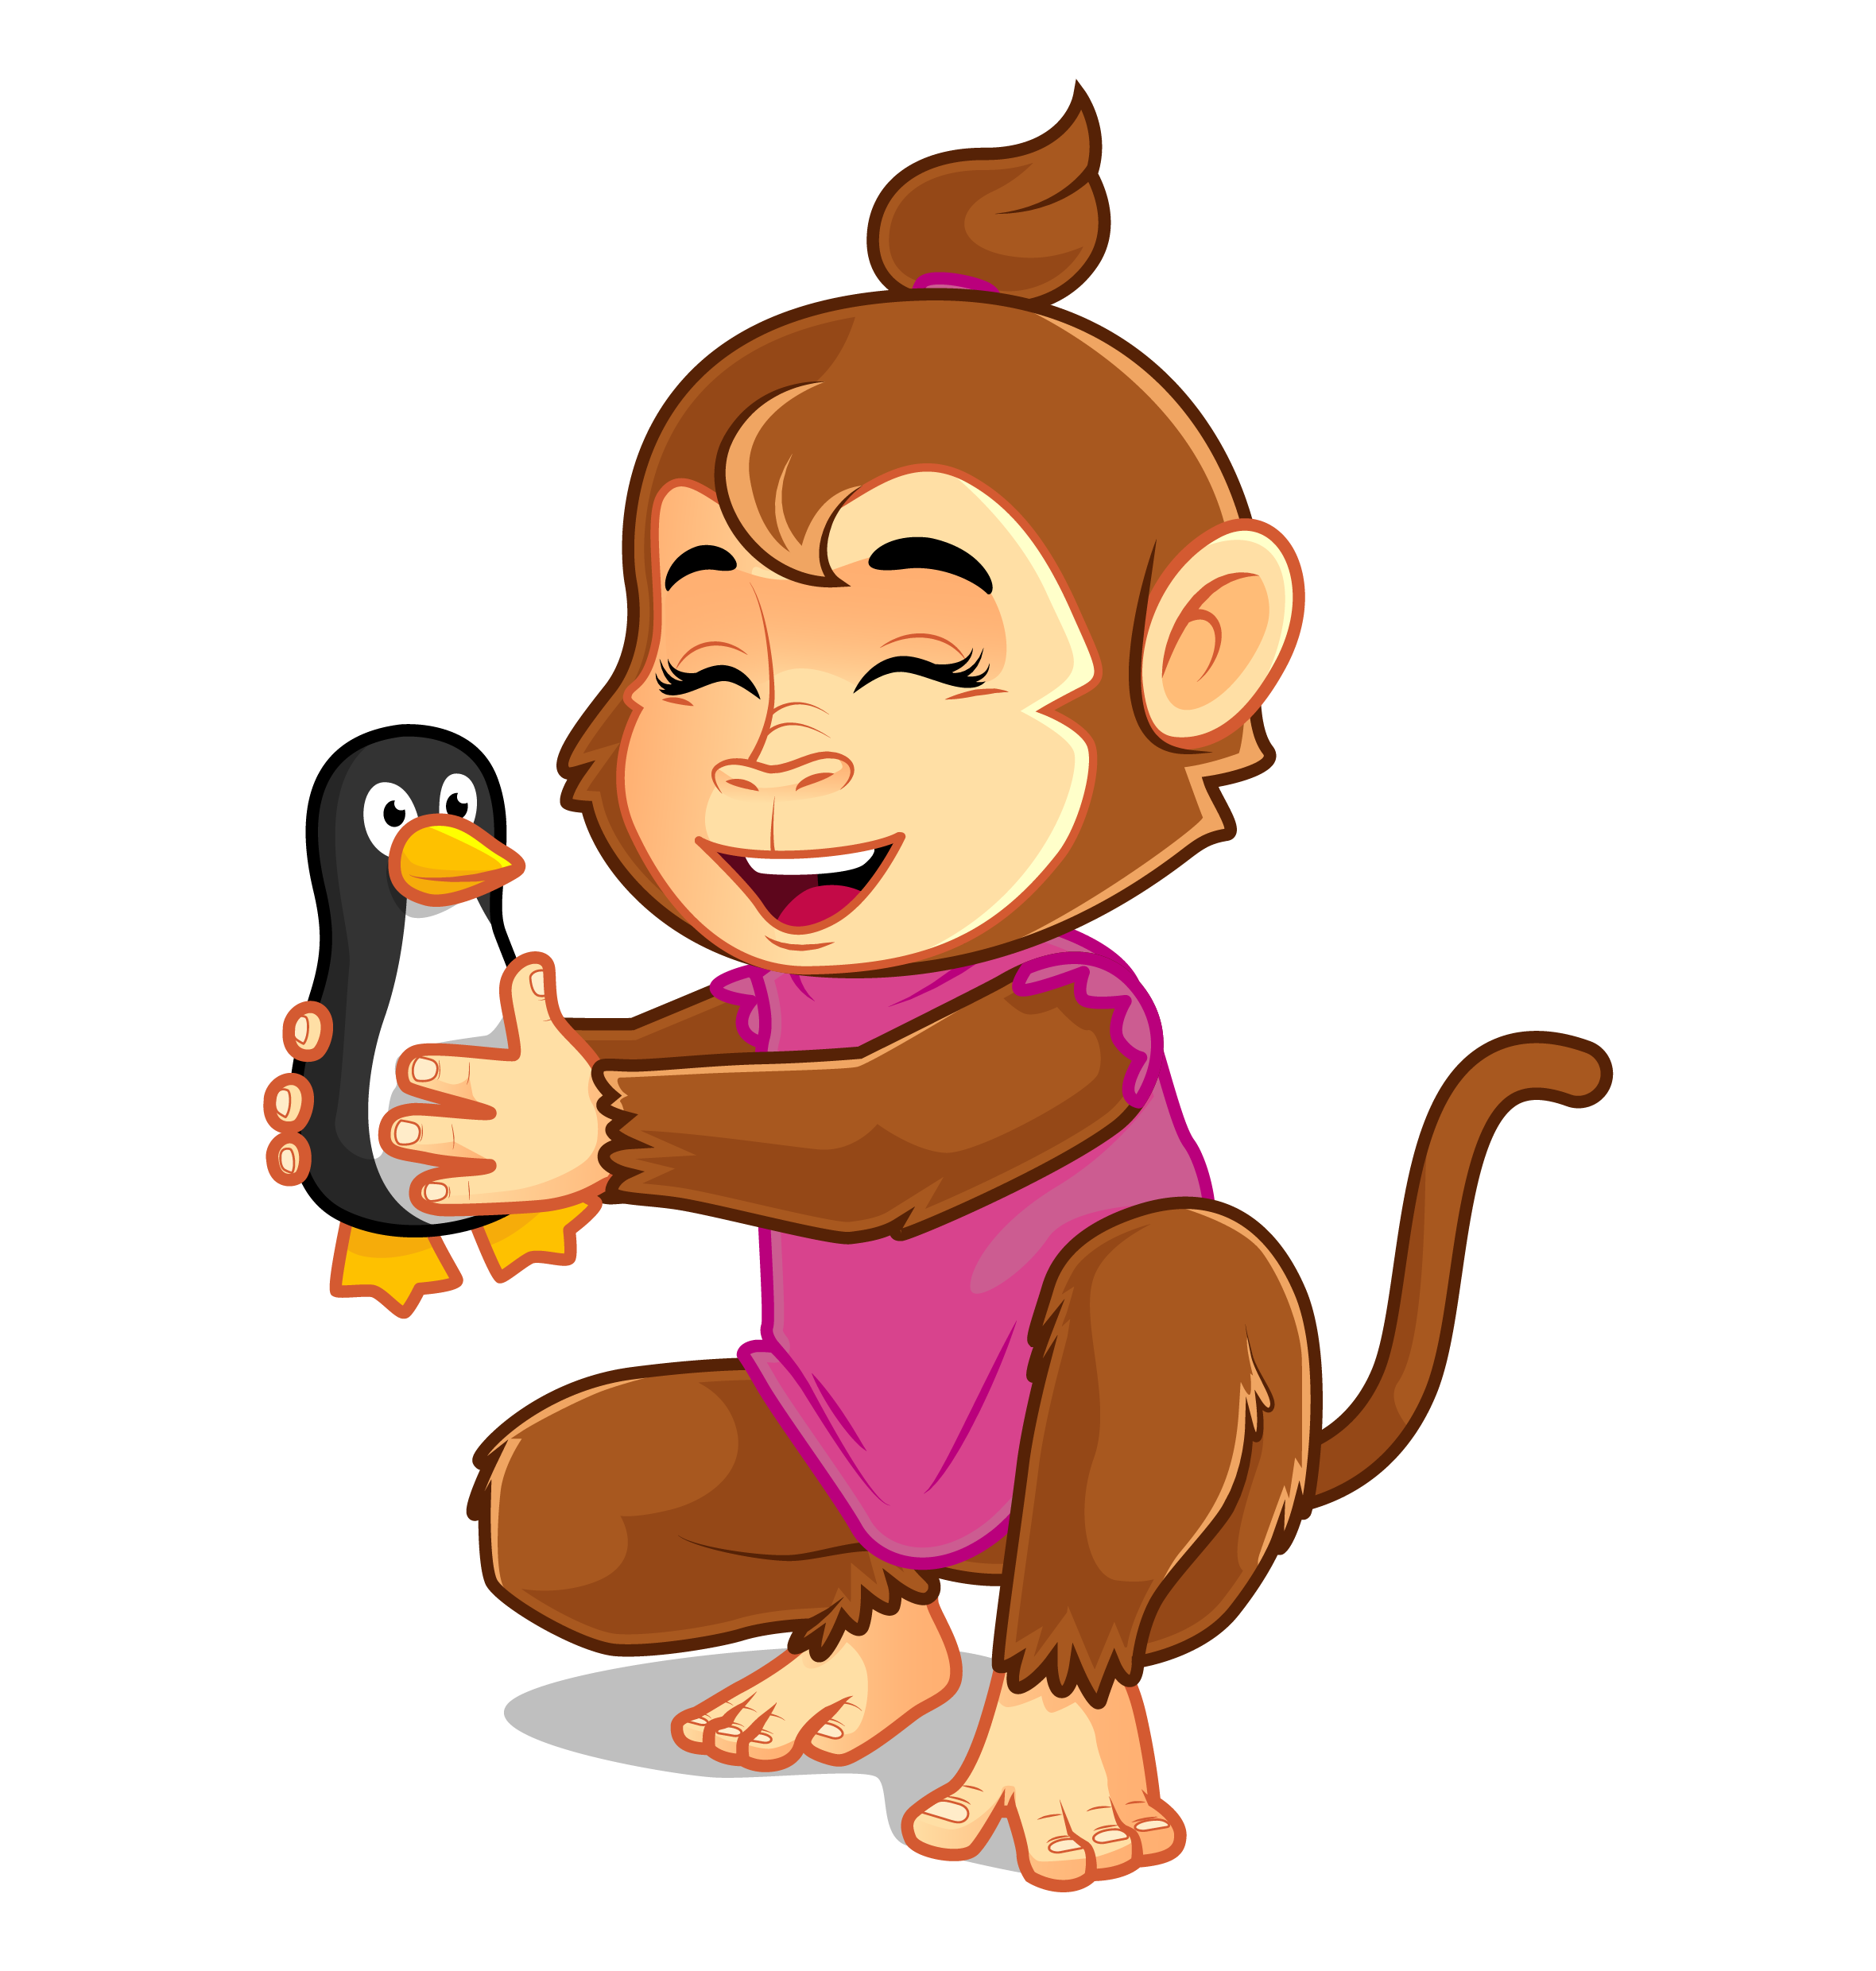 Monkey mascot